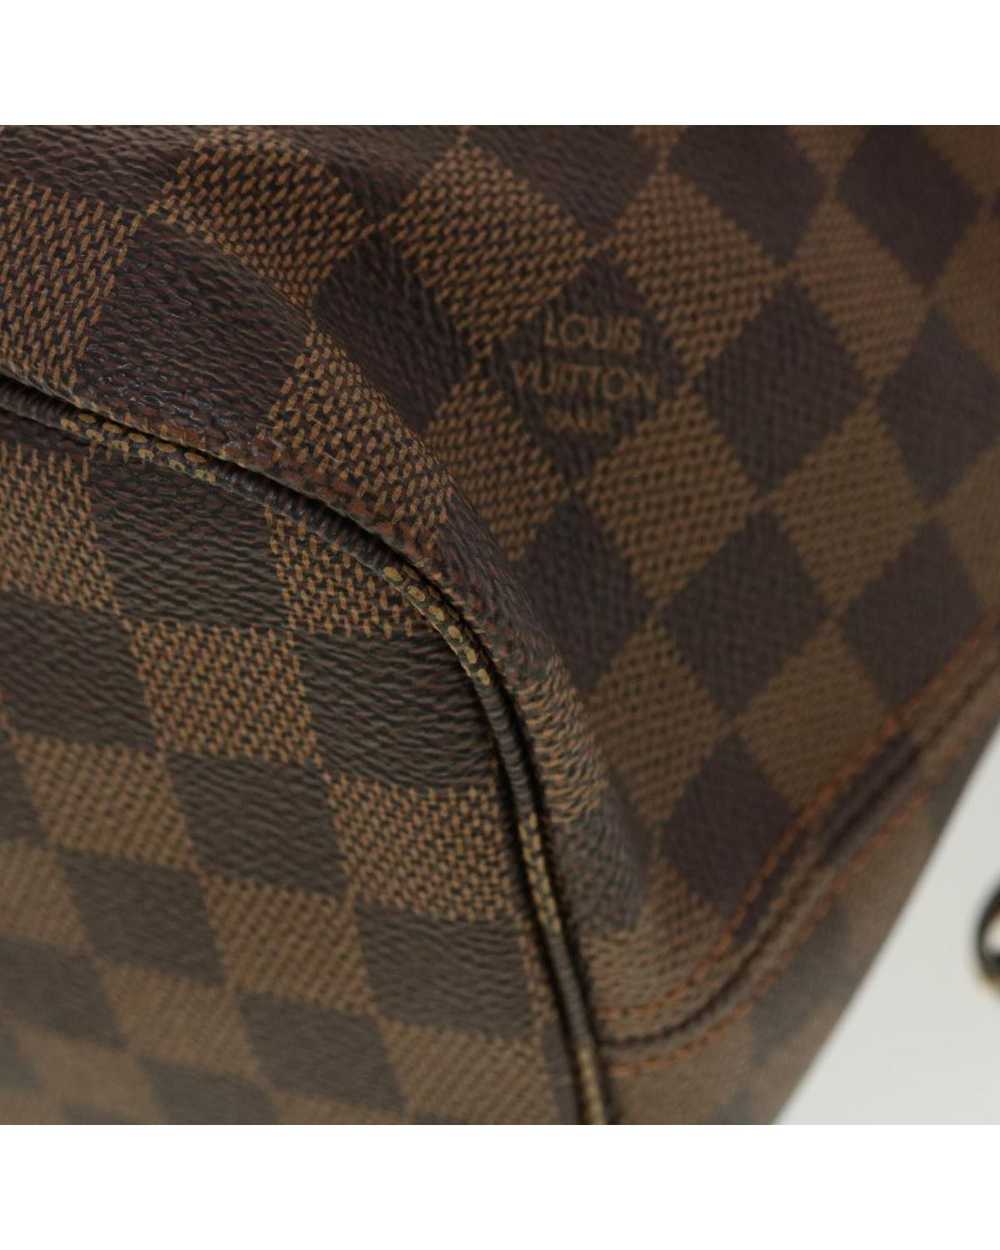 Louis Vuitton Classic Damier Ebene Tote Bag - image 8